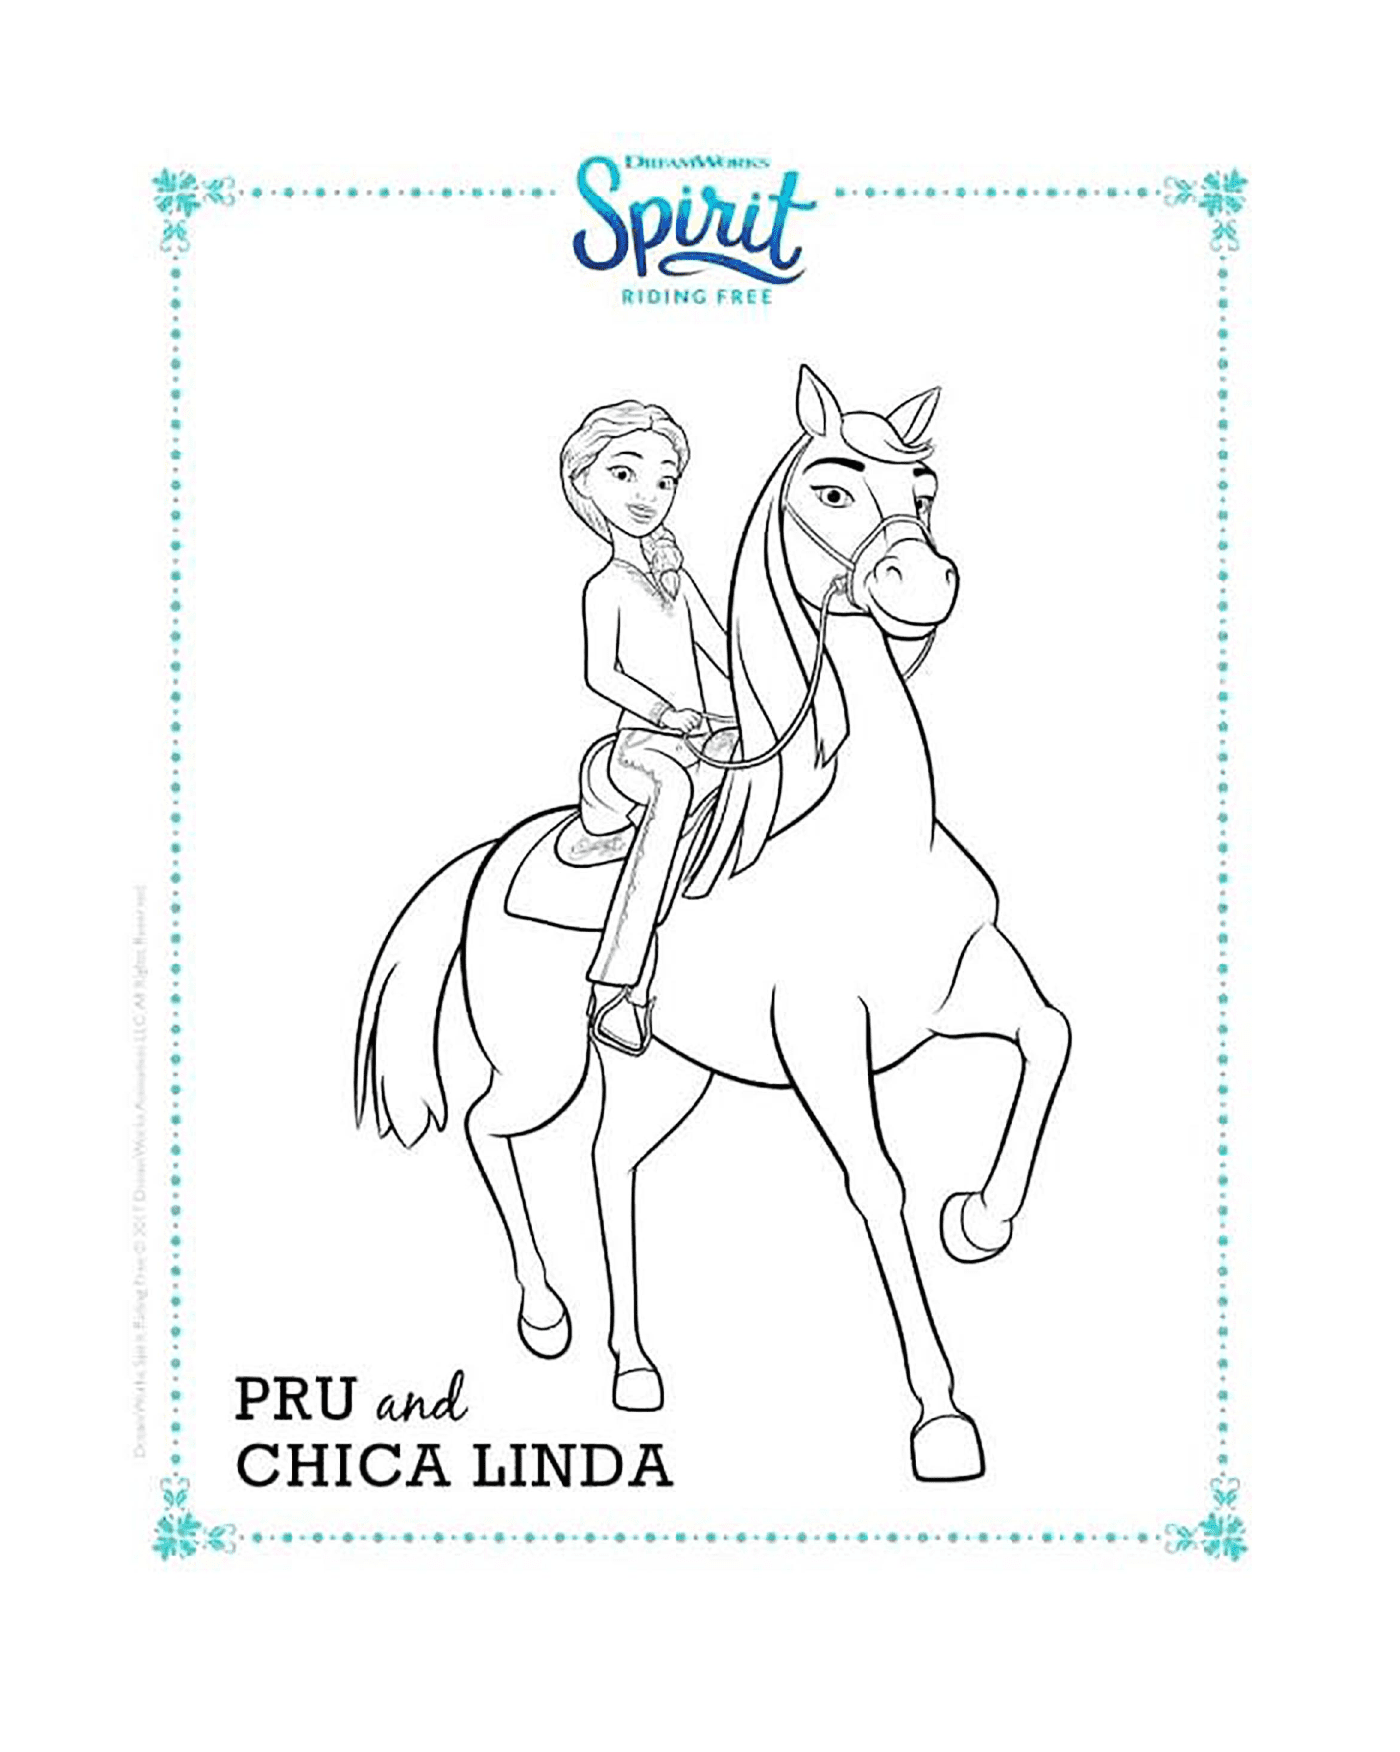  Pru and Chica Linda, riding Spirit 